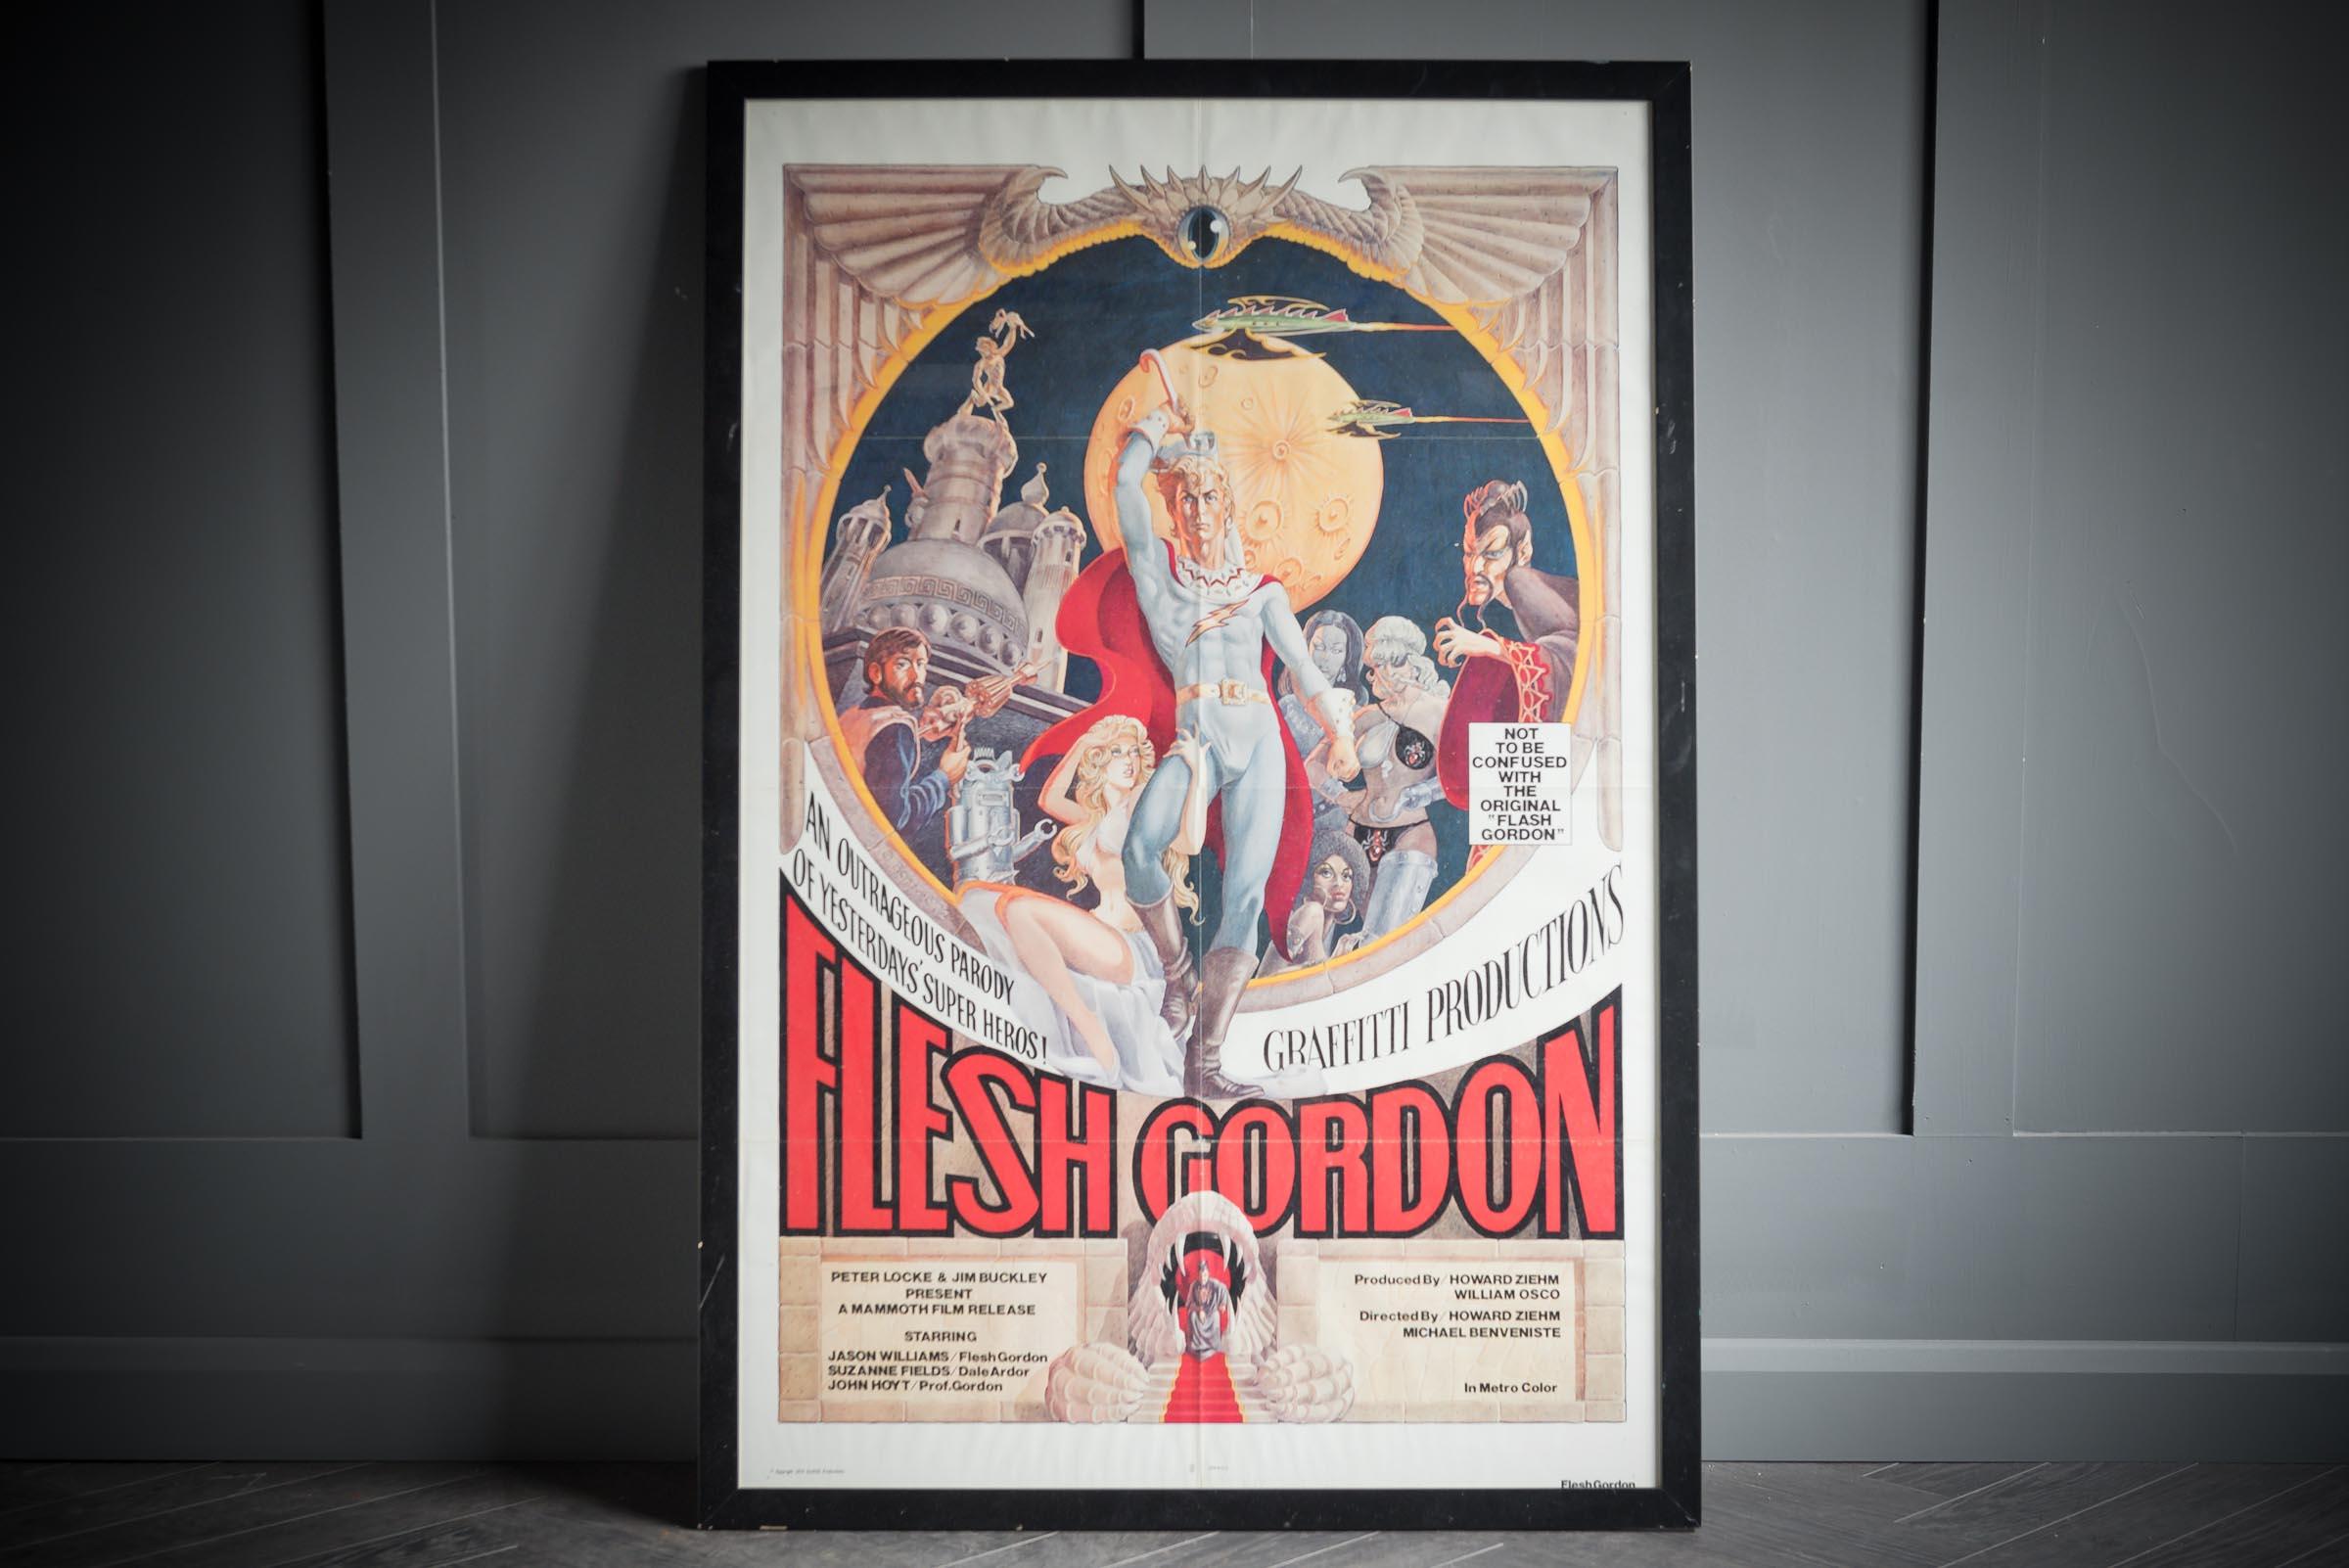 Original flesh gordon film poster from 1974.